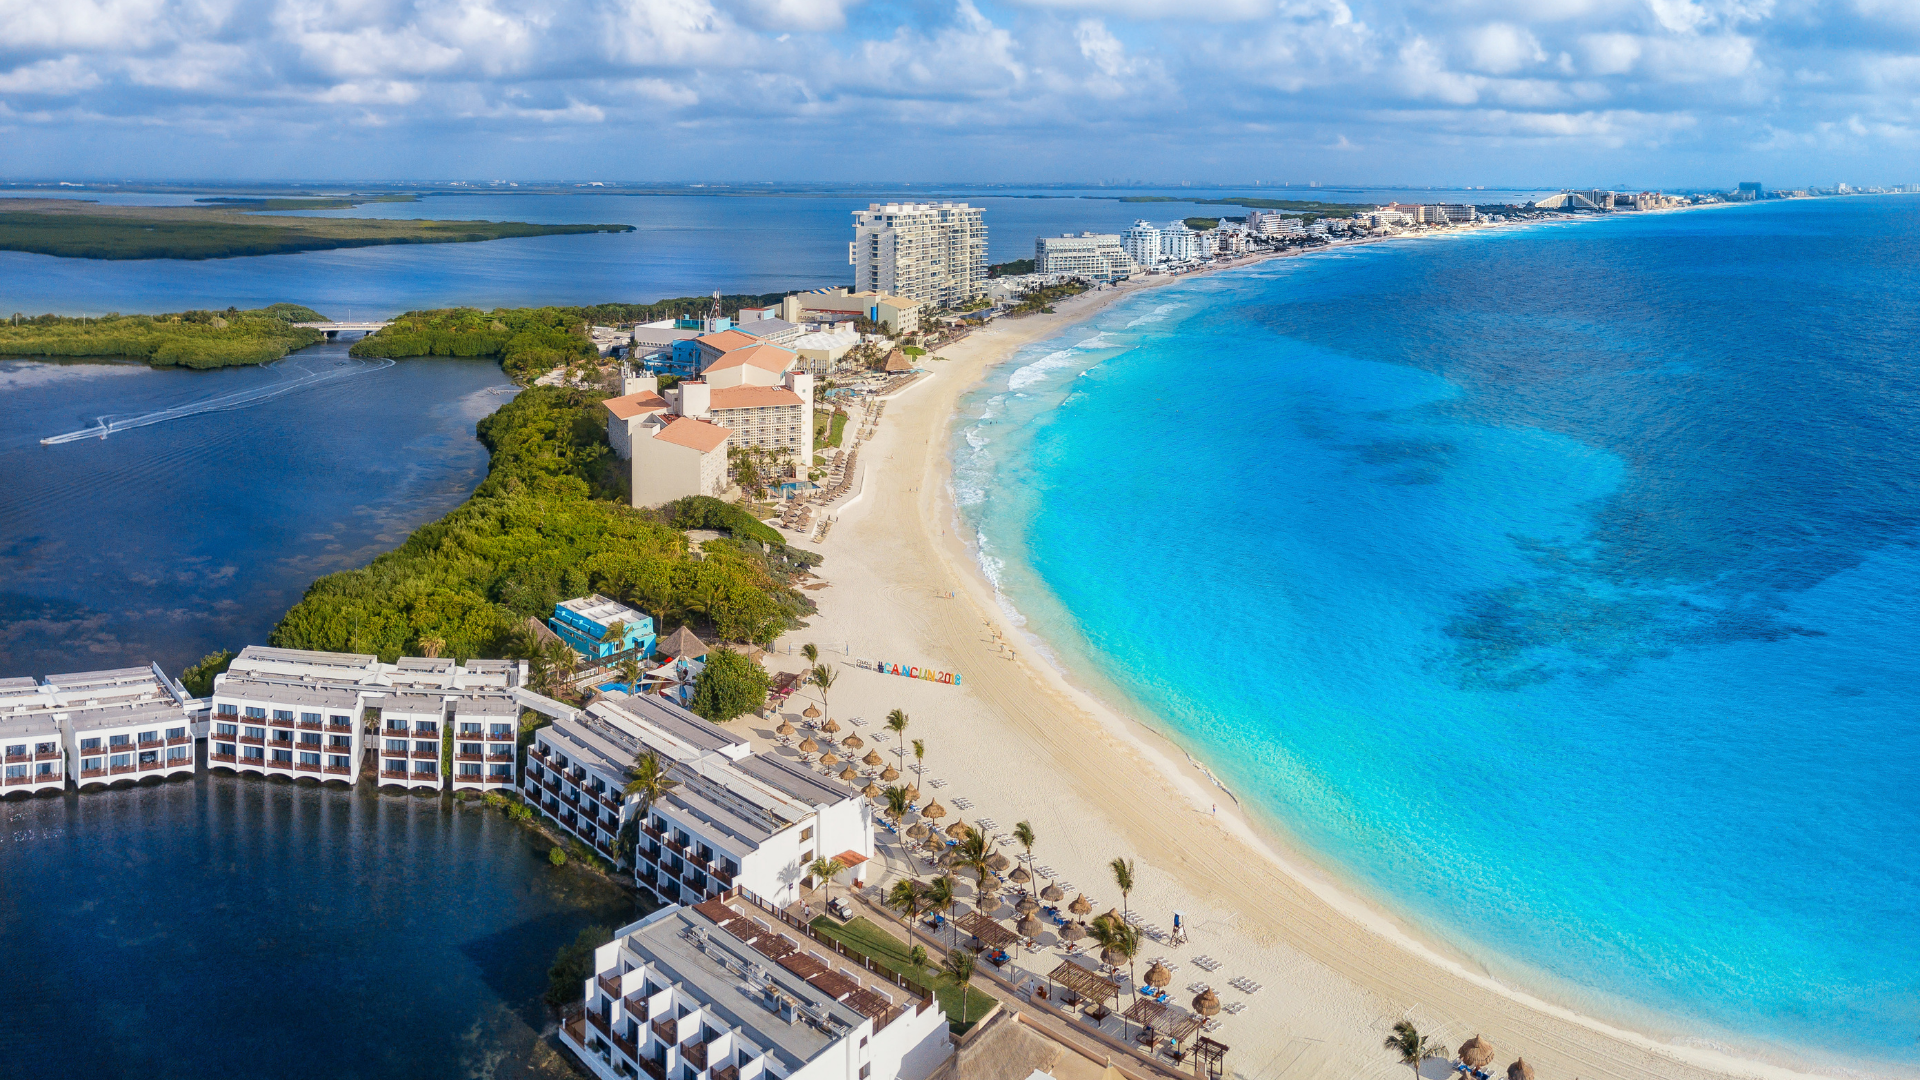 Cancun Hotel Zone, where to stay in Cancun